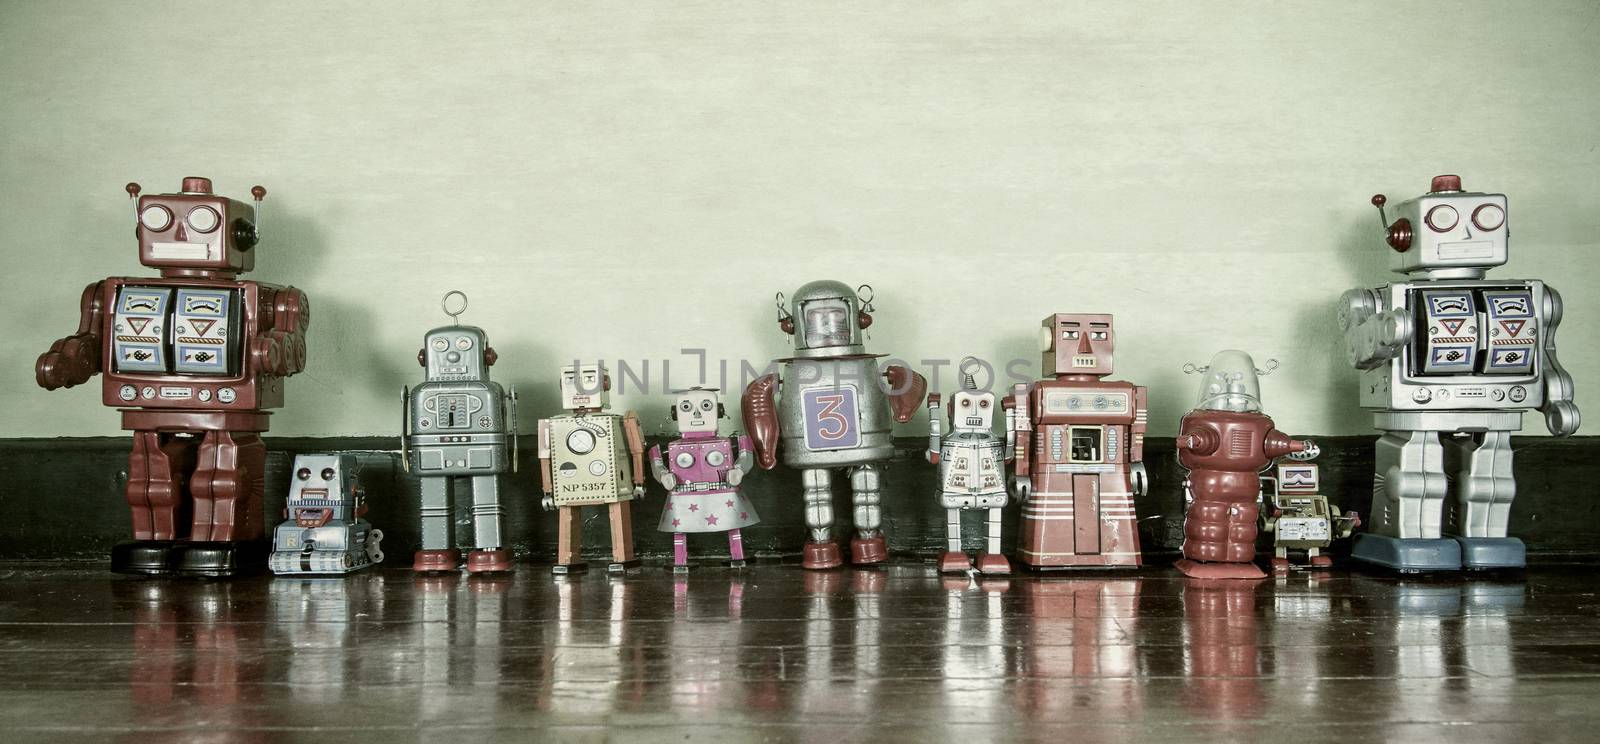 robots by davincidig